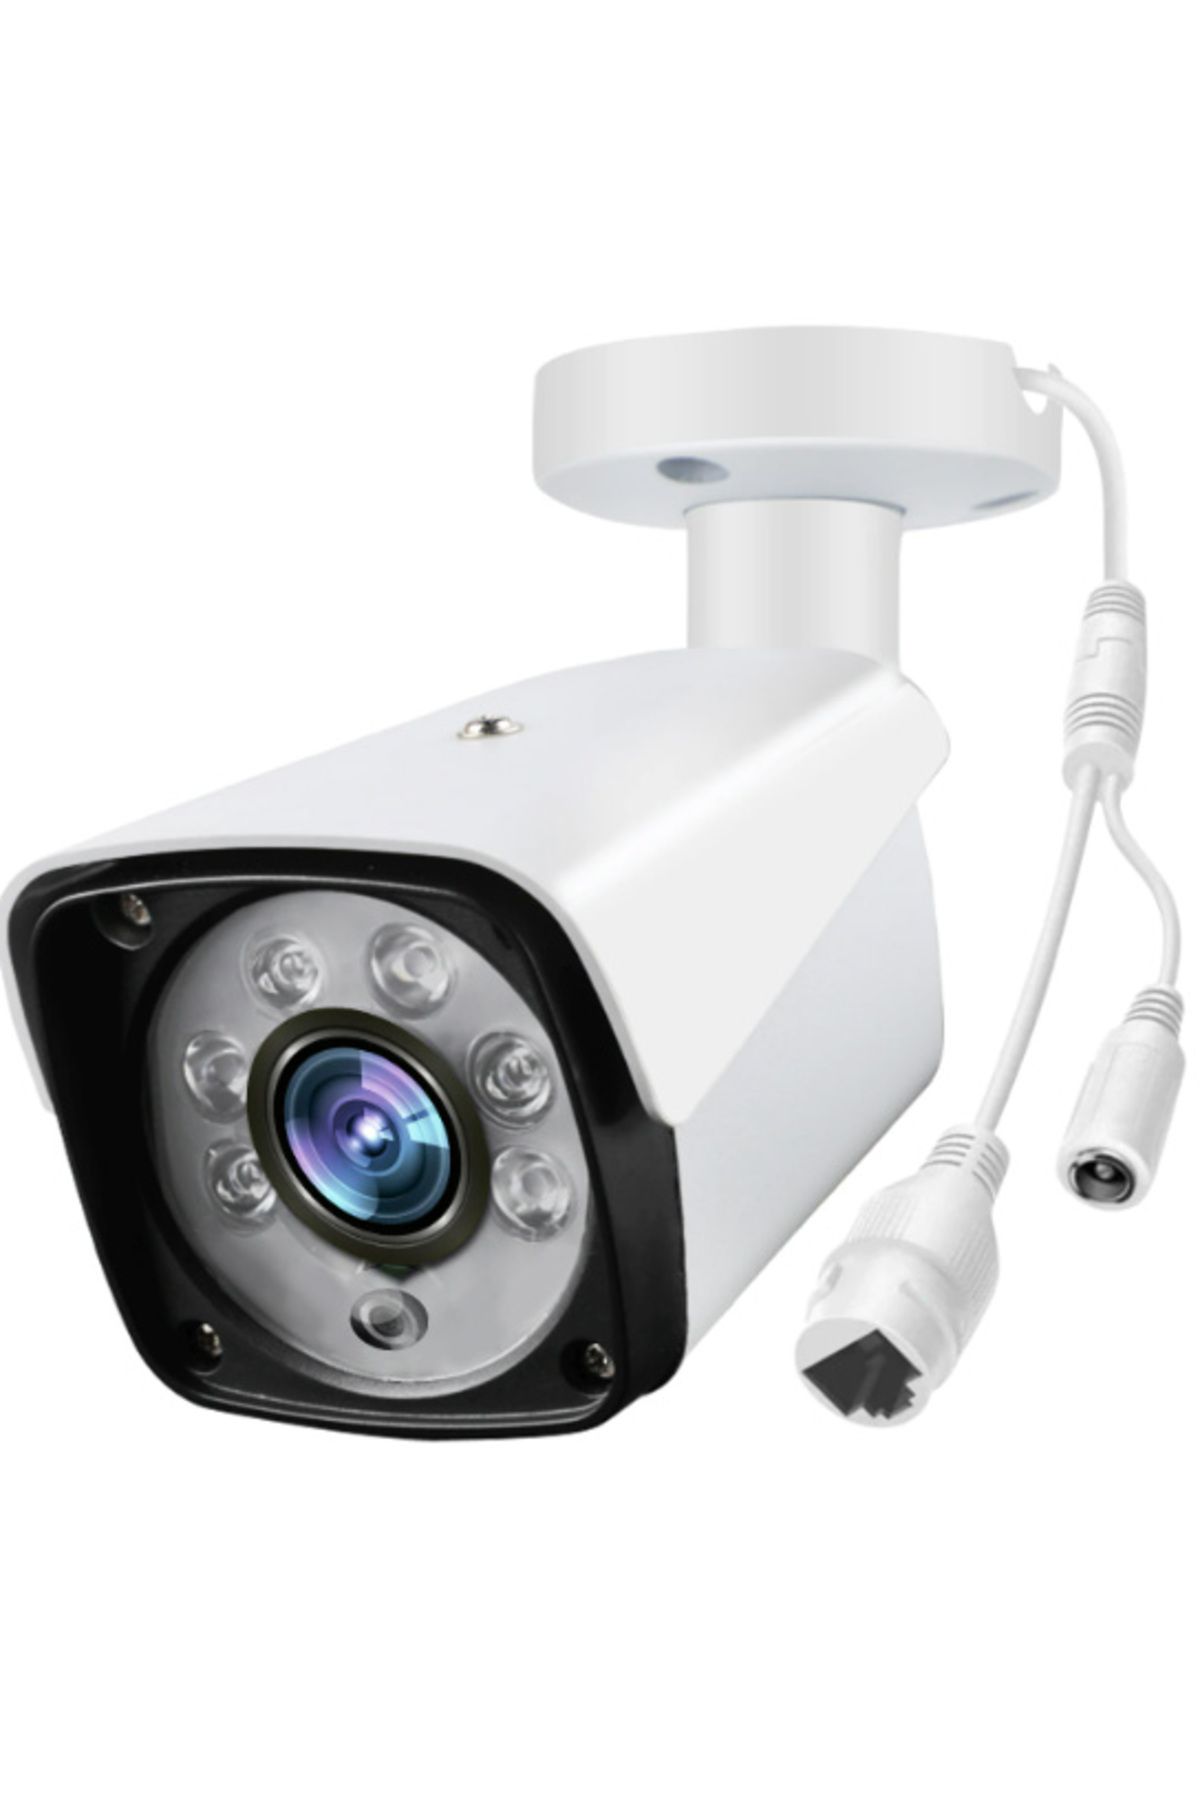 DTS Teknoloji J-tech Jt-2060 5mp Ip Bullet Poe 3.6mm Network Kamera Gece-gündüz Renkli Görüntü